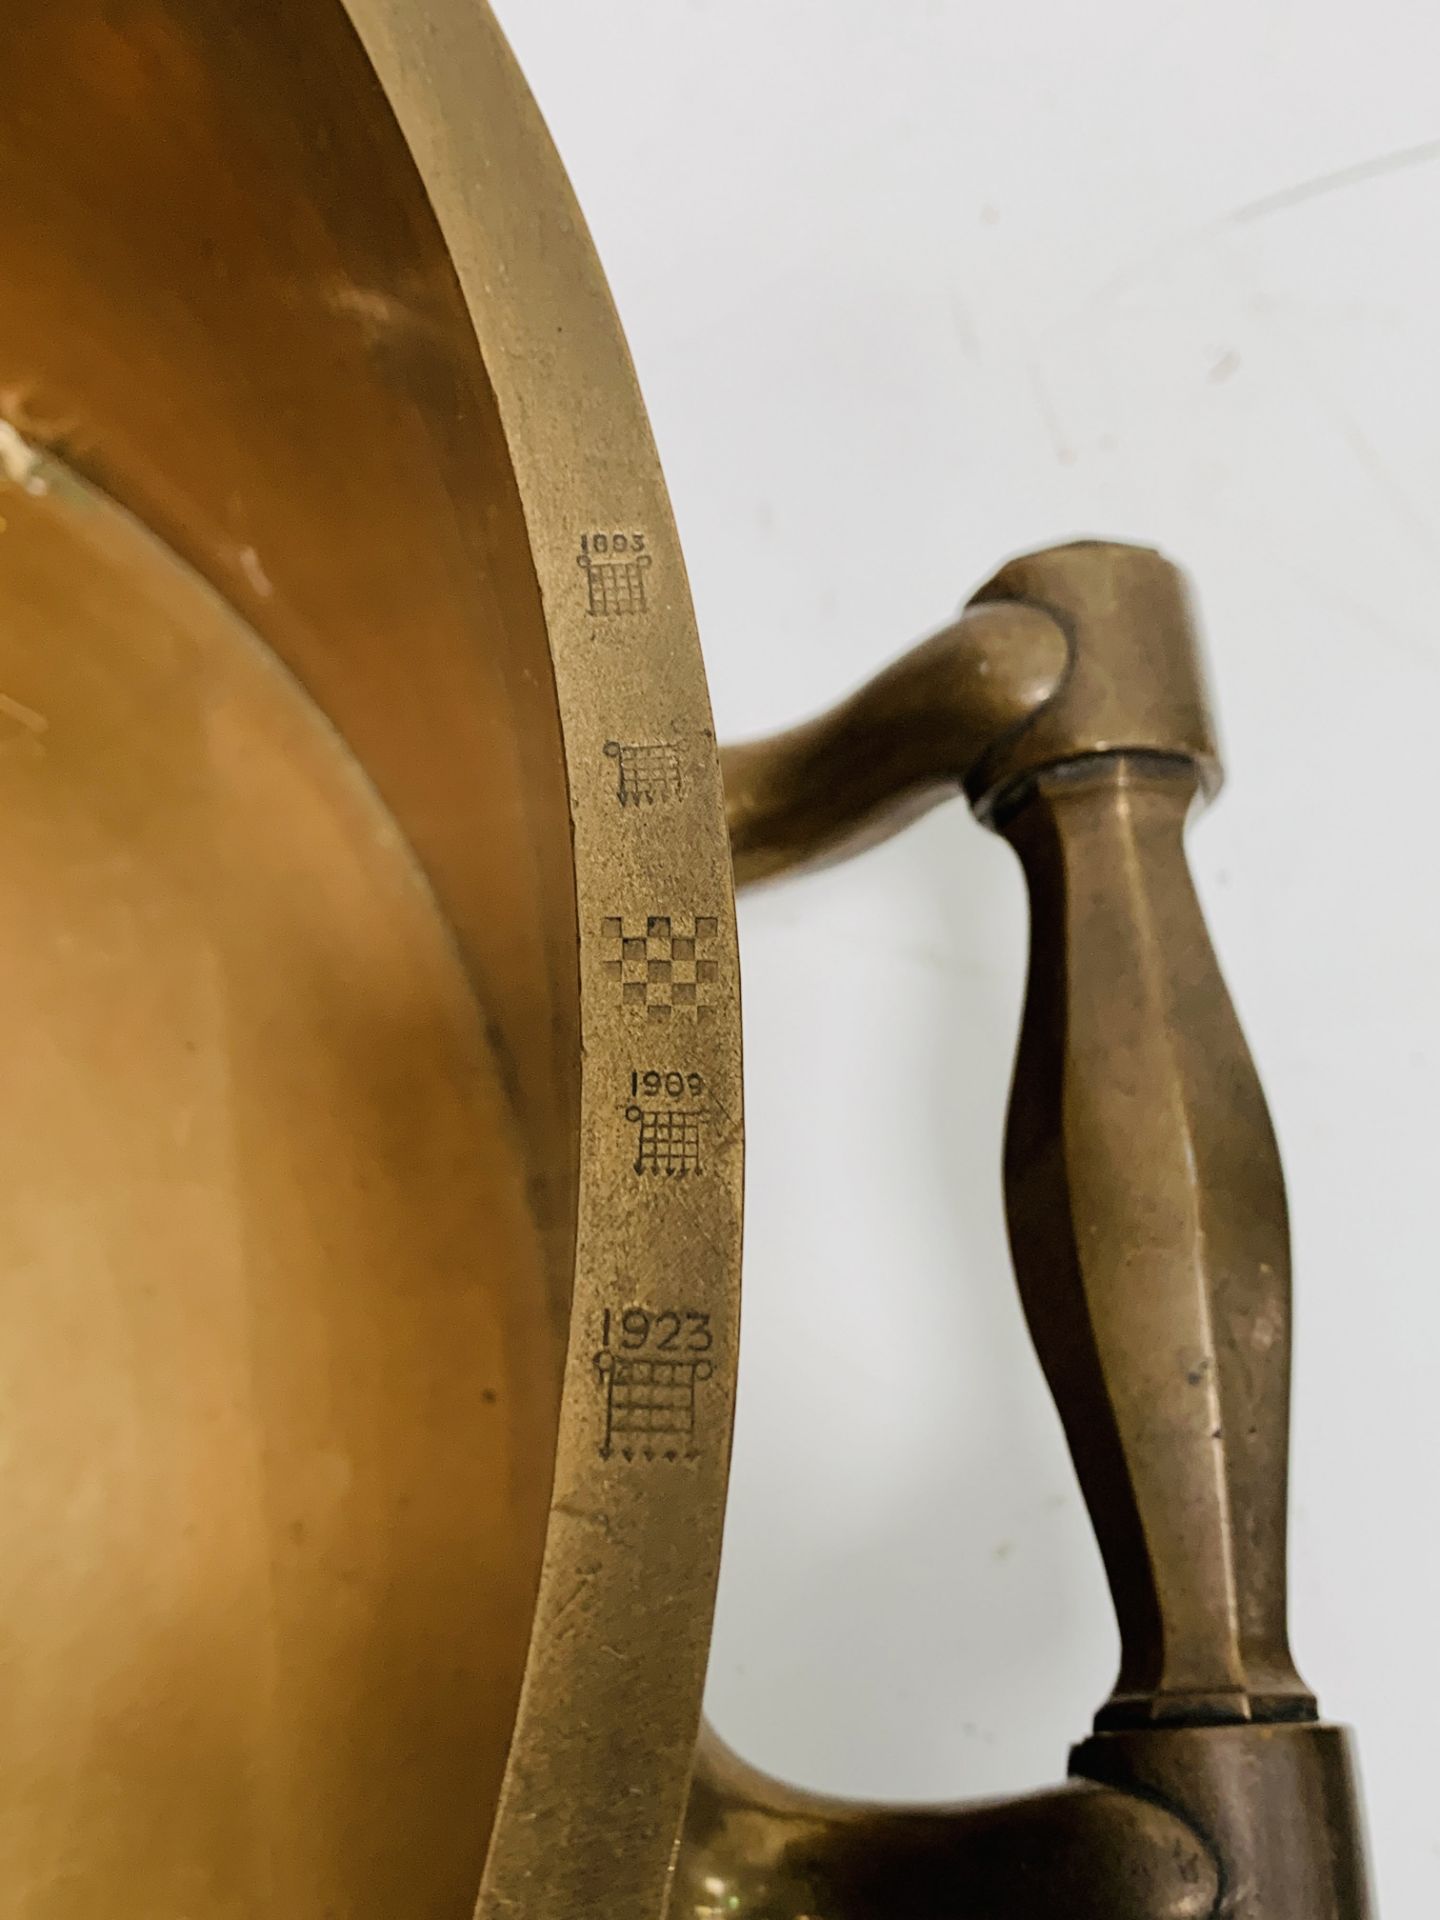 Imperial bushel bronze measure - Image 4 of 7